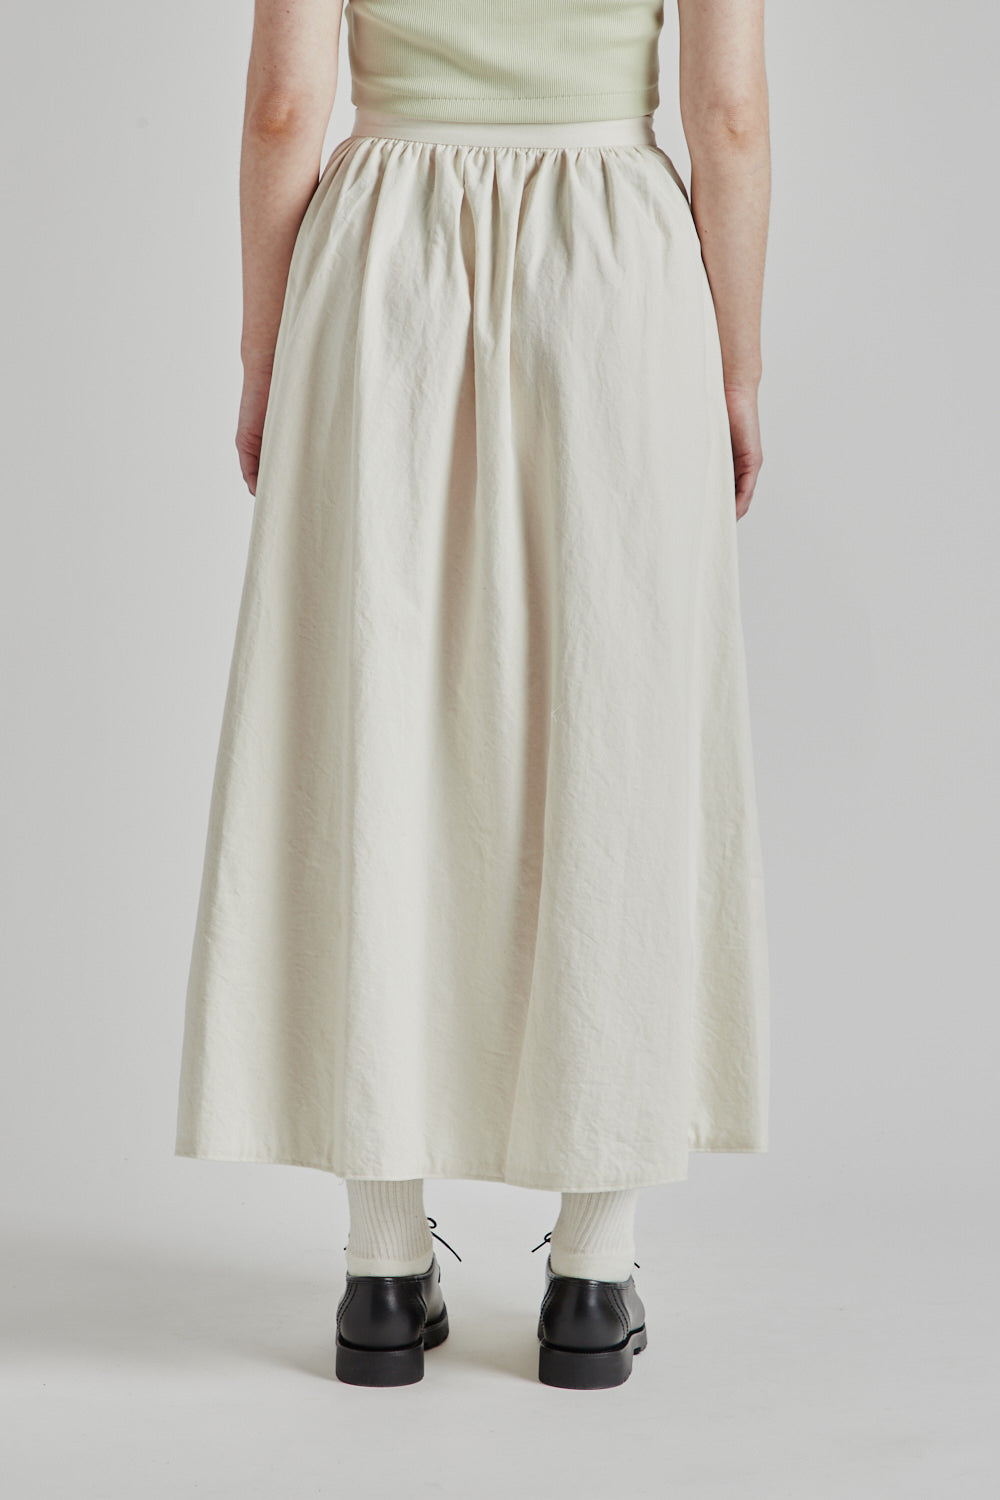 Blurhms Light Oz Denim Gather Skirt in Ivory